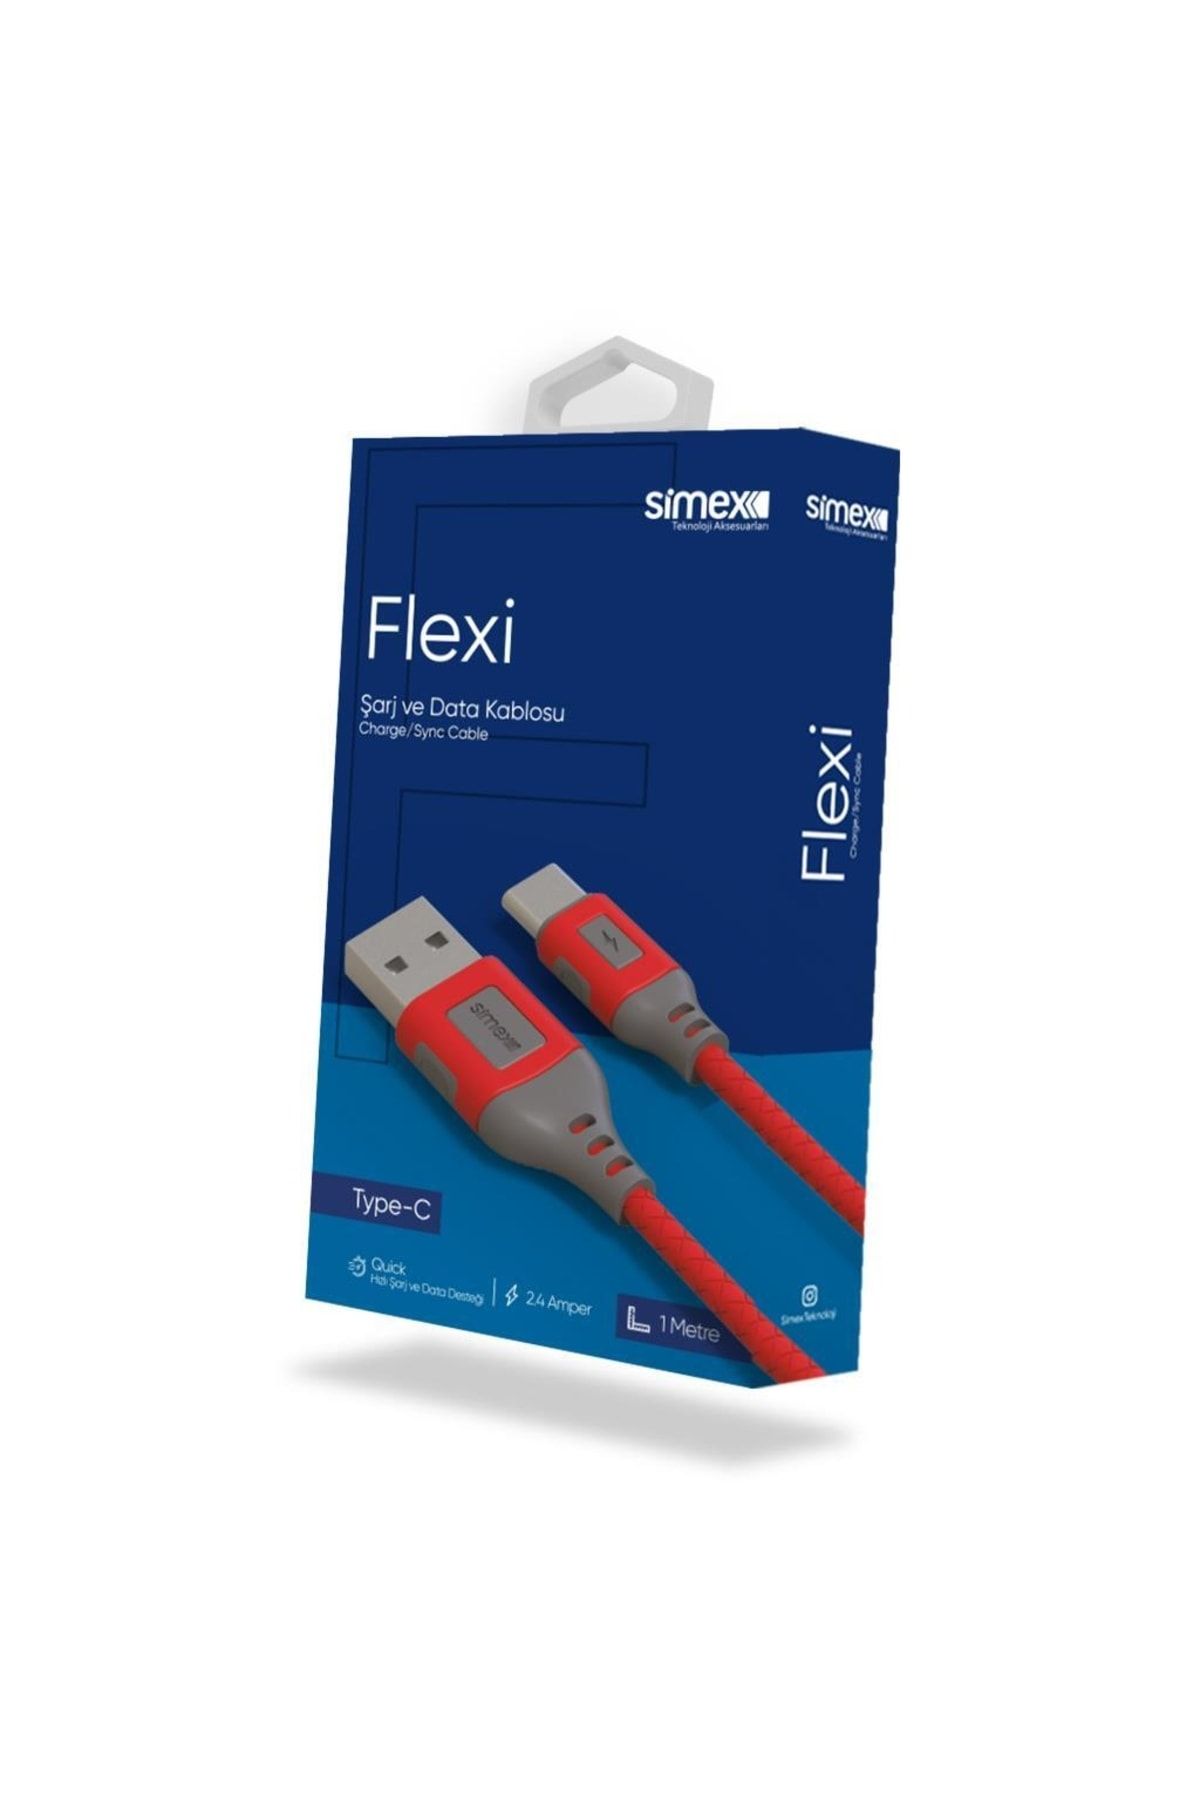 Simex Universal Type C Data Kablosu Spk-09 Flexi 1mt Kırmızı